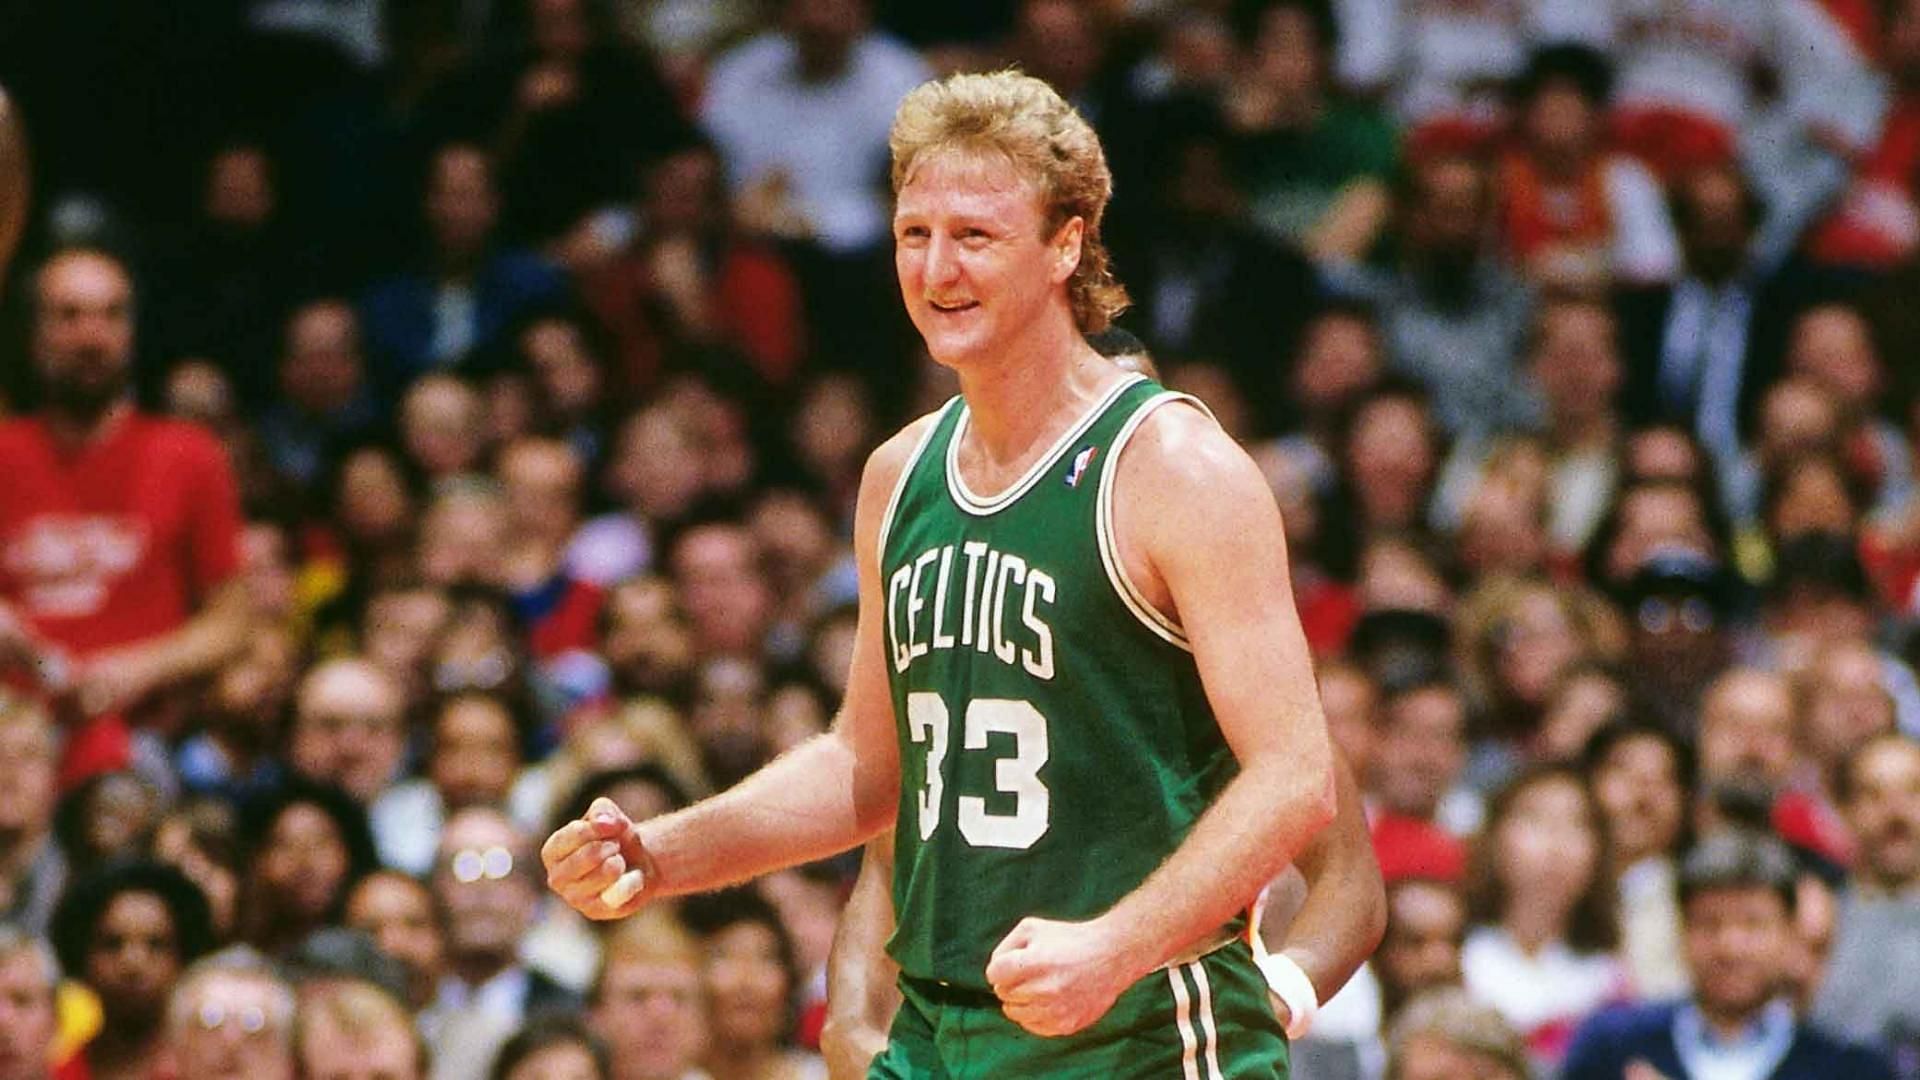 Hall of Famer Larry Bird of the Boston Celtics